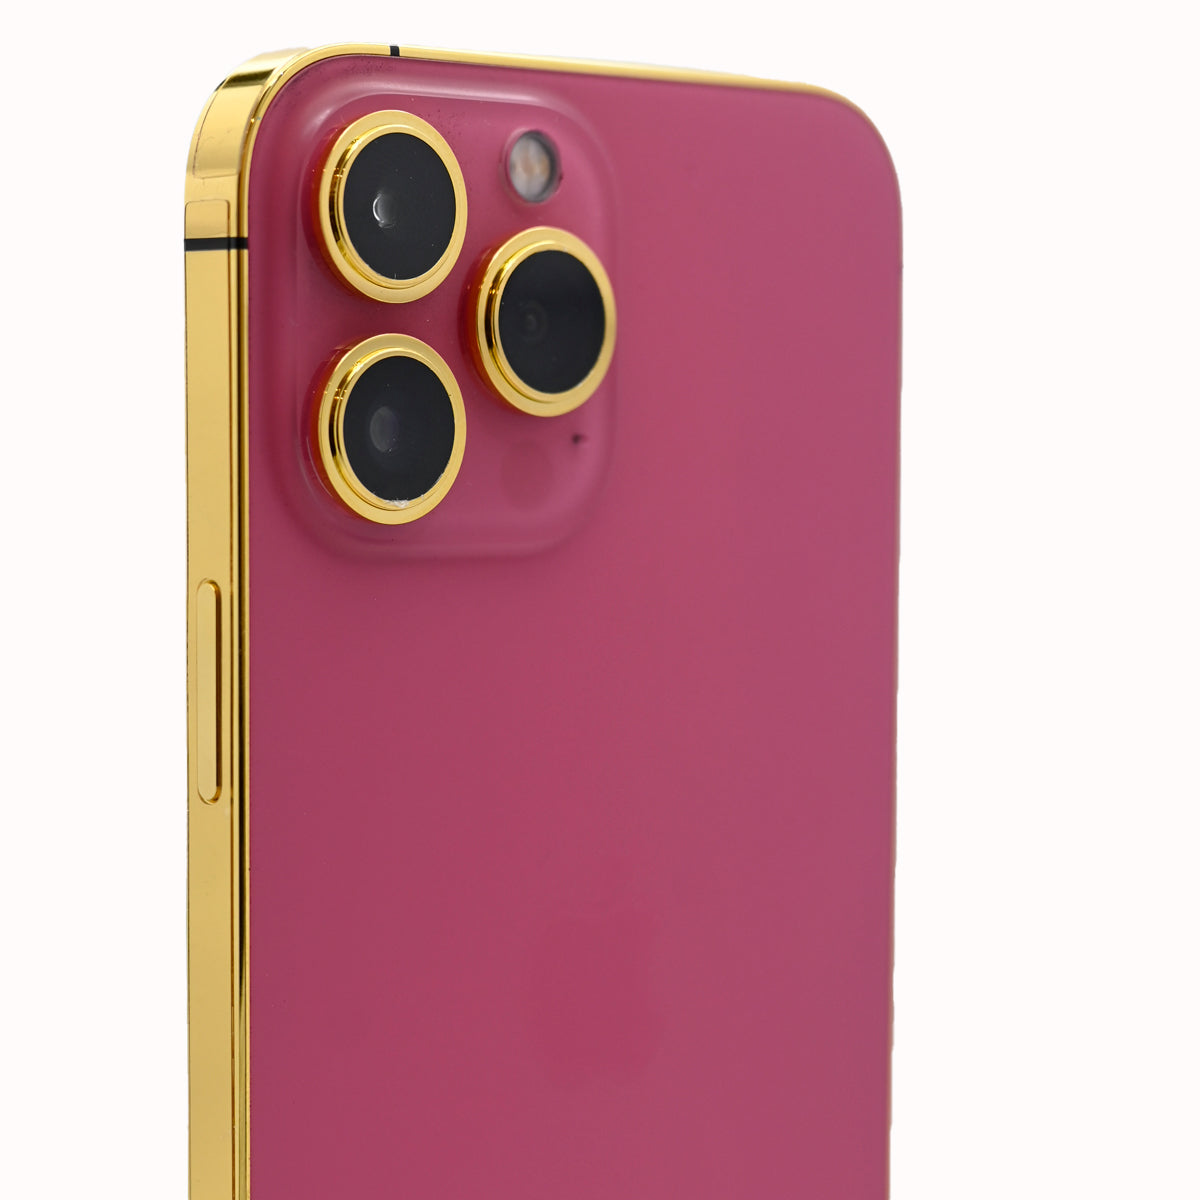 Caviar Luxury 24k Gold Frame Customized iPhone 13 Pro 1 TB Pink